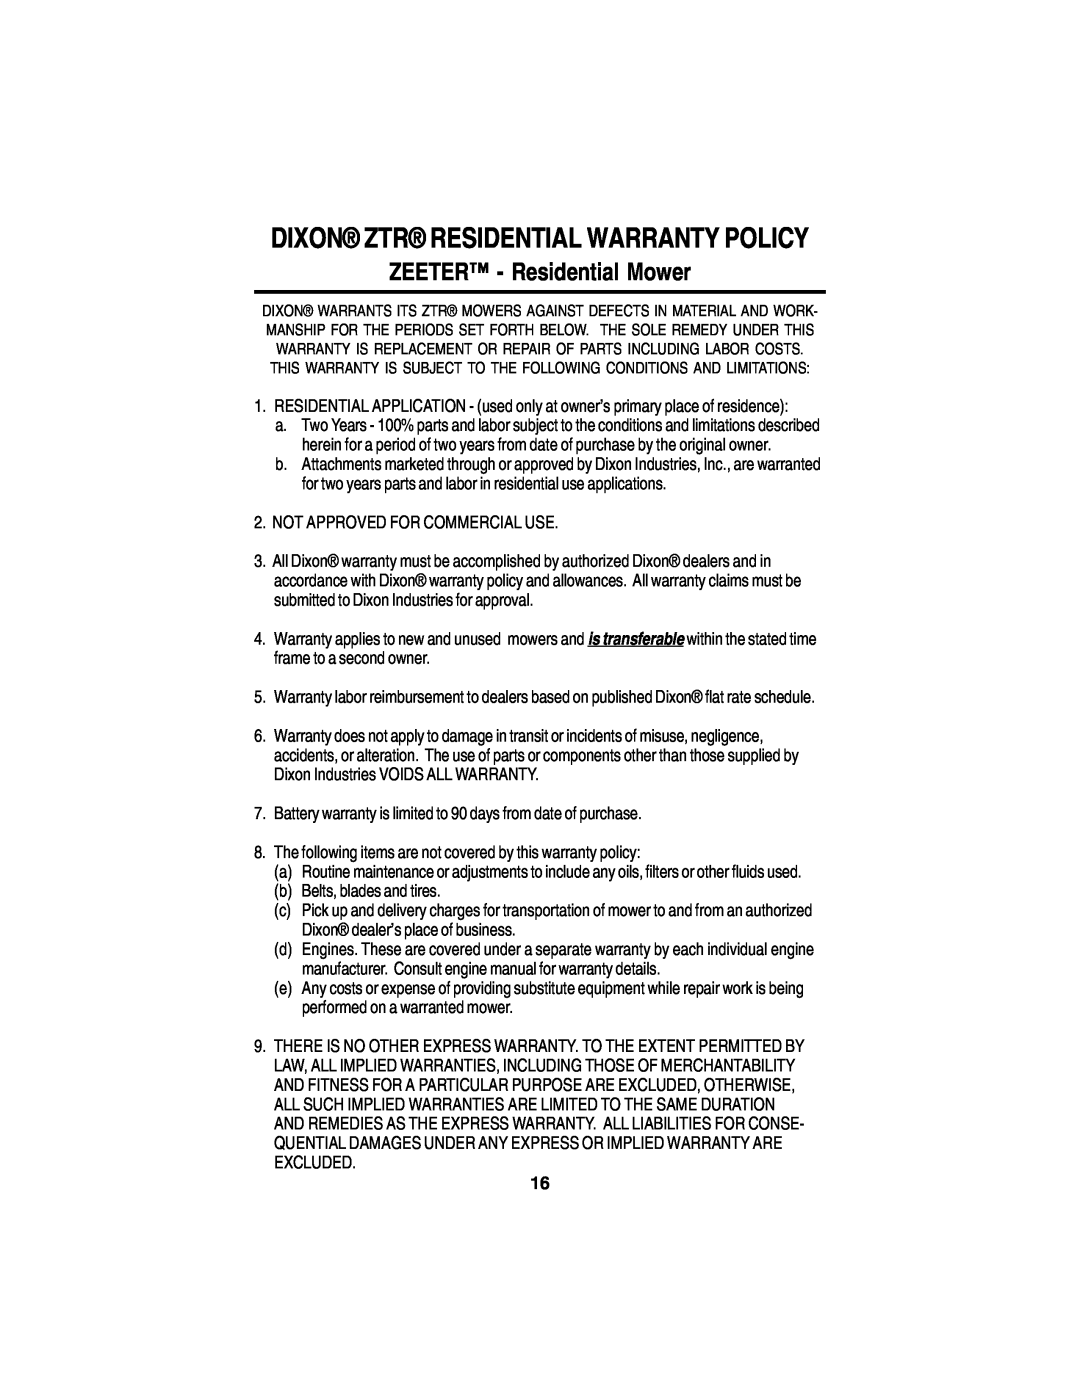 Dixon 14295-0804 manual ZEETER - Residential Mower, Dixon Ztr Residential Warranty Policy 